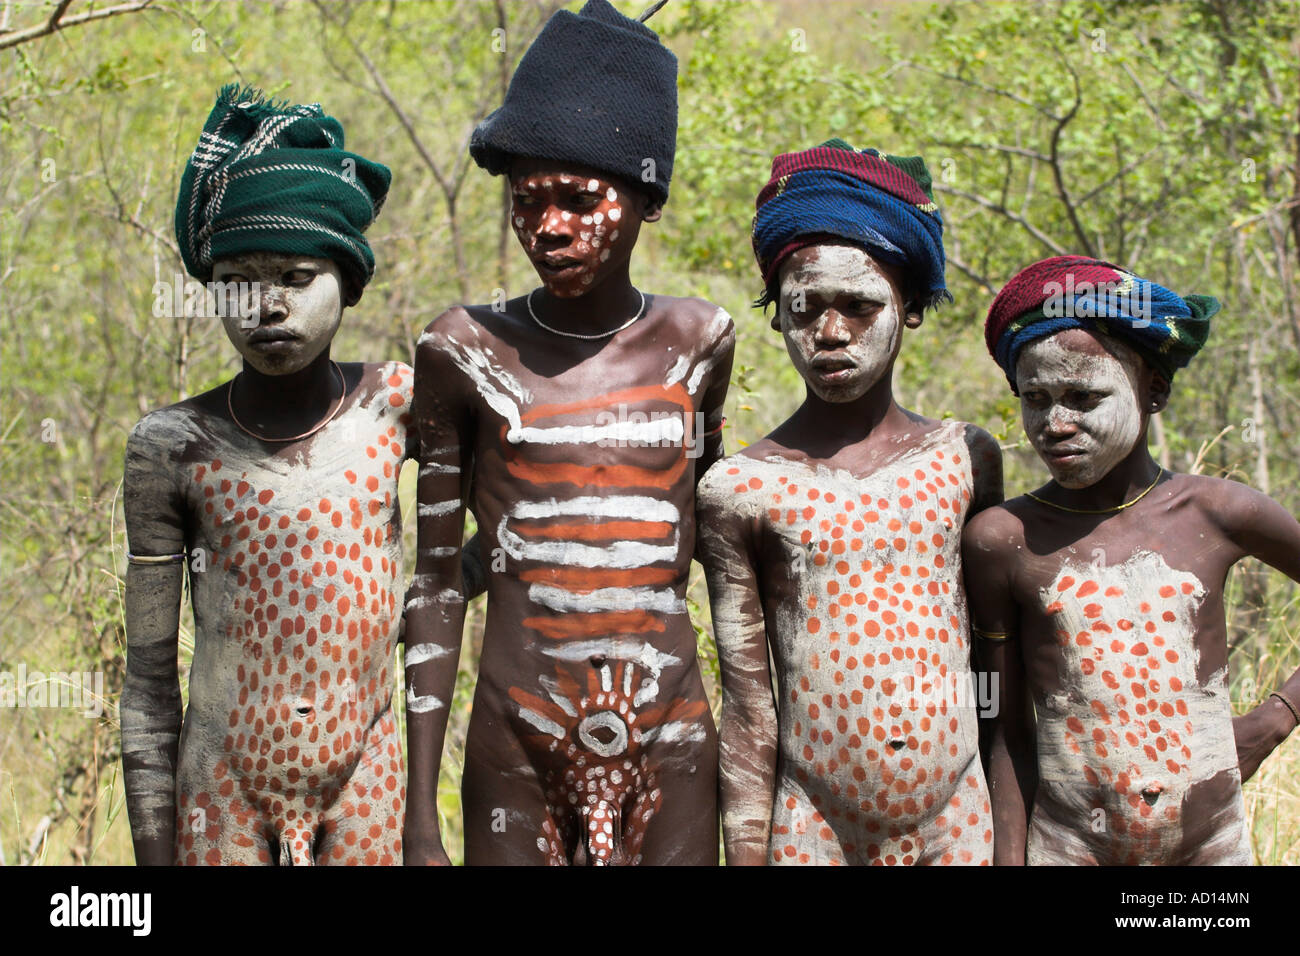 Ethiopia, South Omo Valley, Mursi boys with body painting Stock Photo